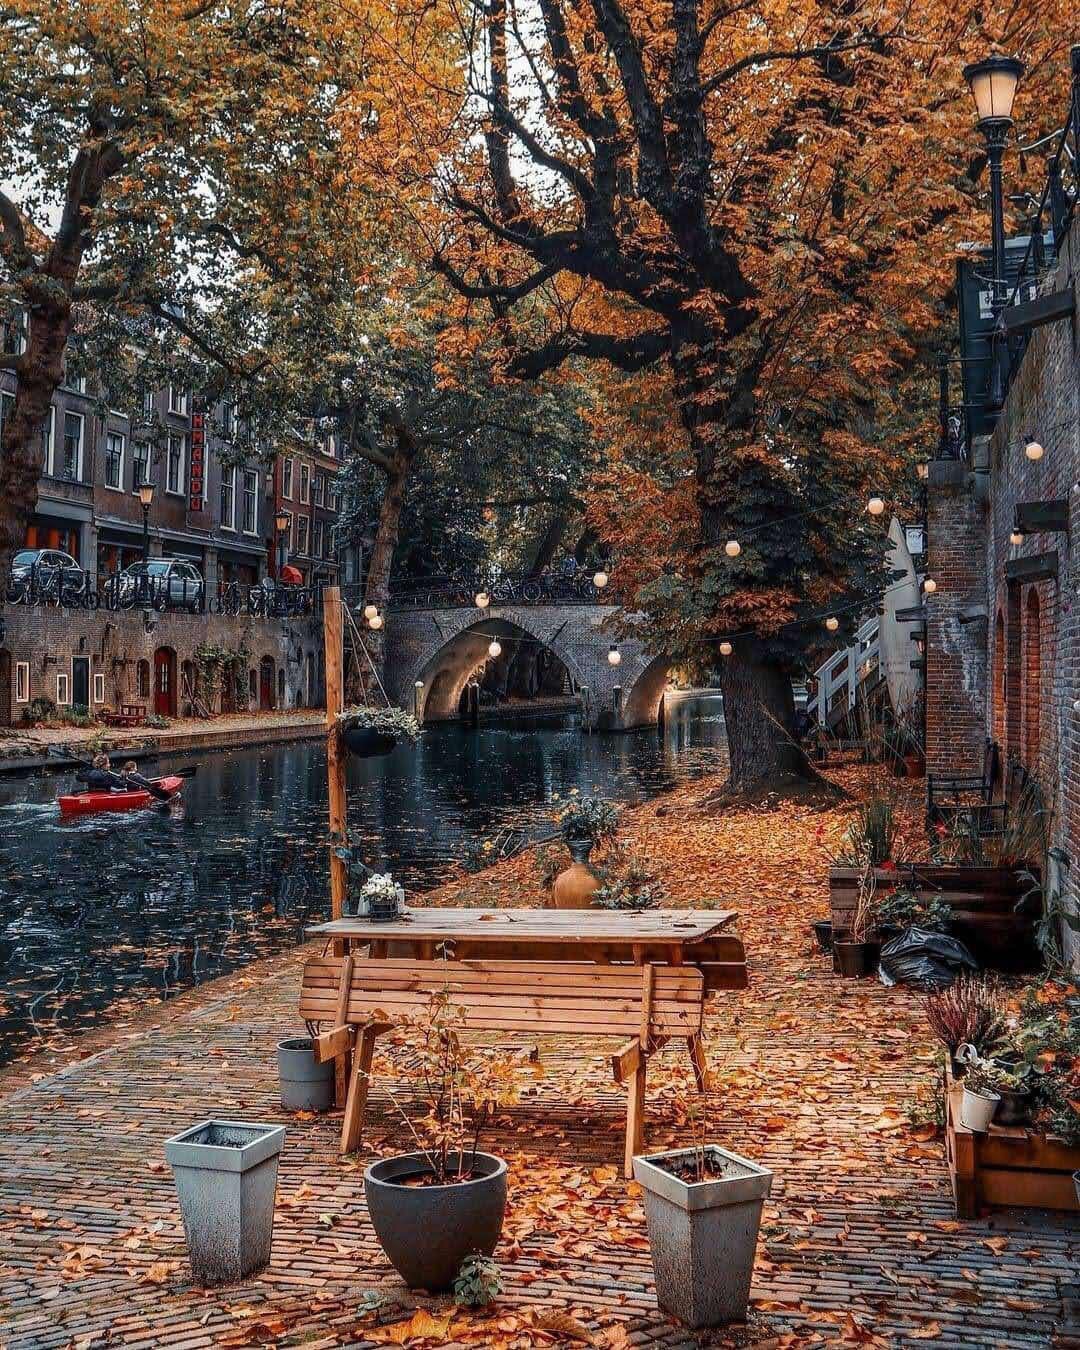 Autumn leaves in Utrecht